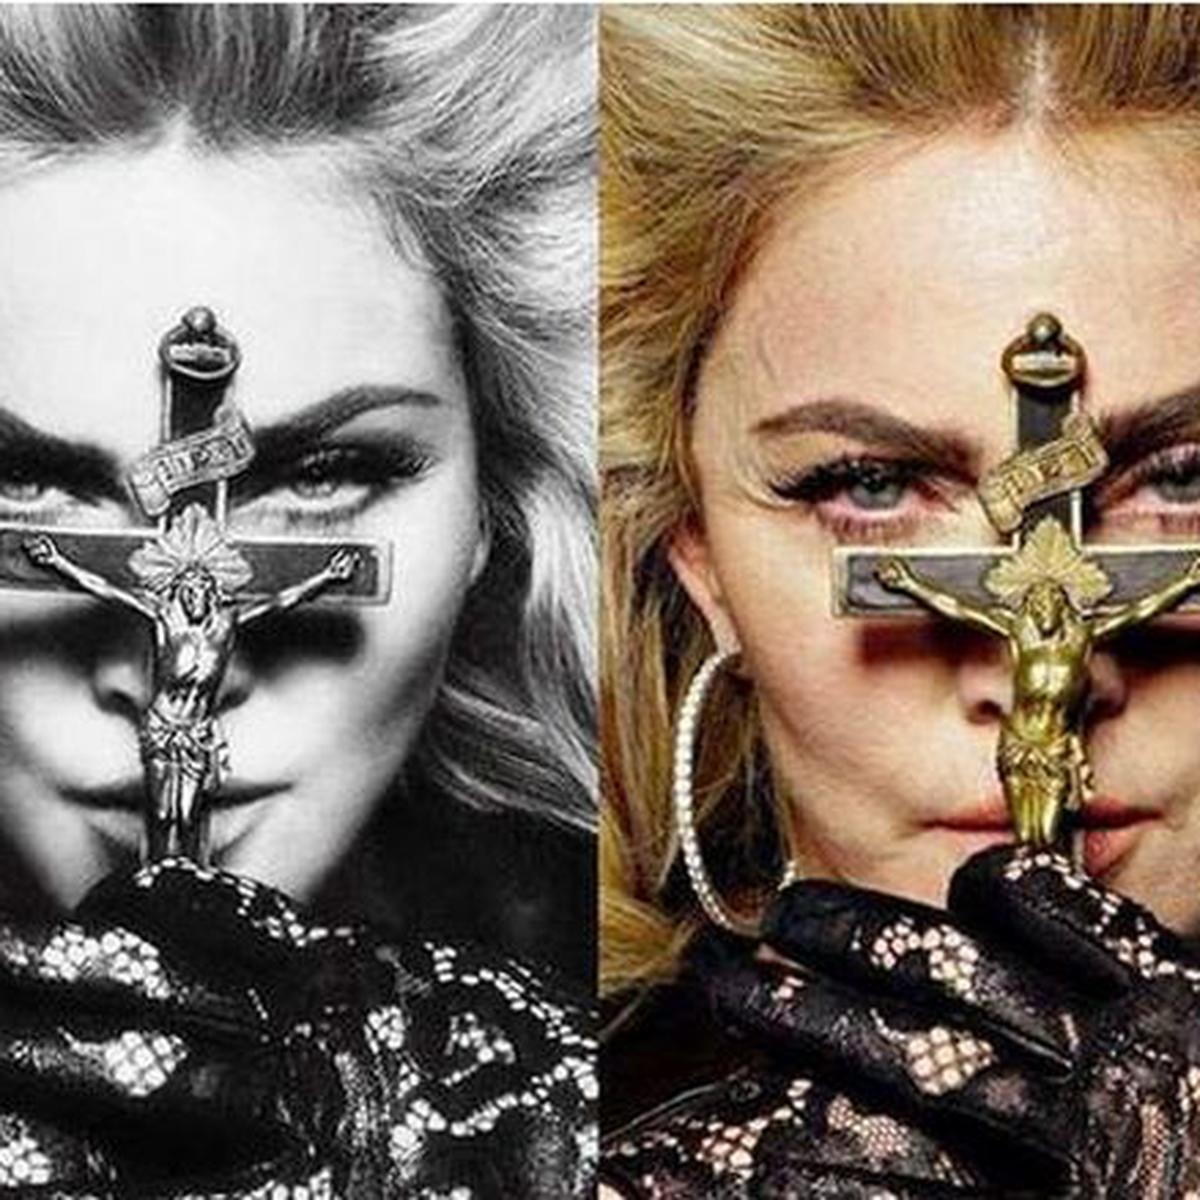 Madonna Sans Photoshop - StyleFrizz